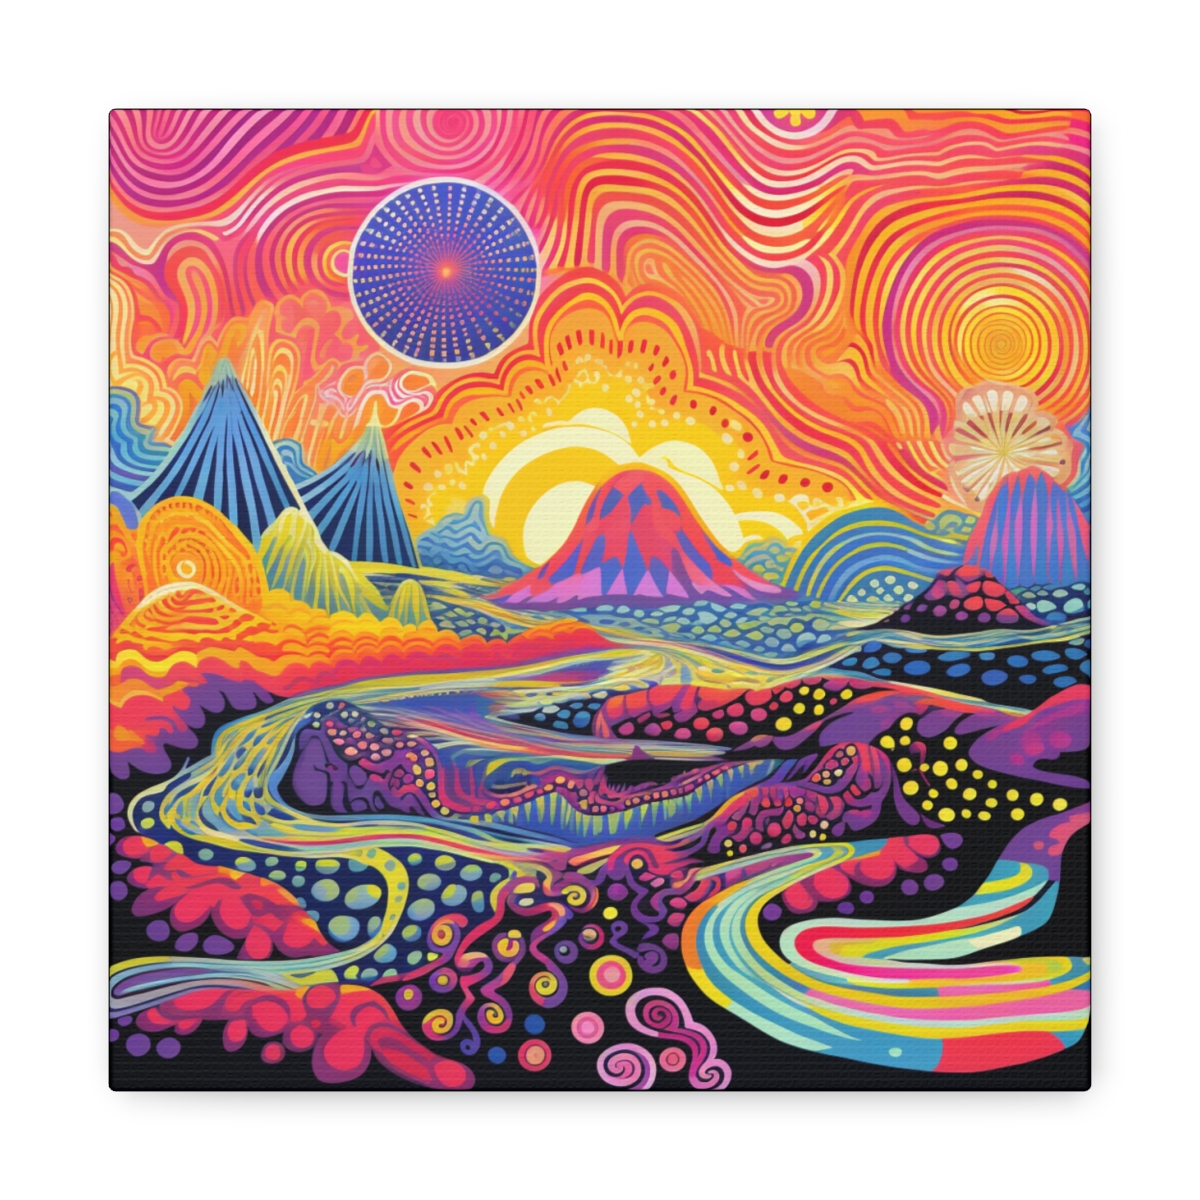 Trippy Hippie Art Canvas Print: The World On Acid